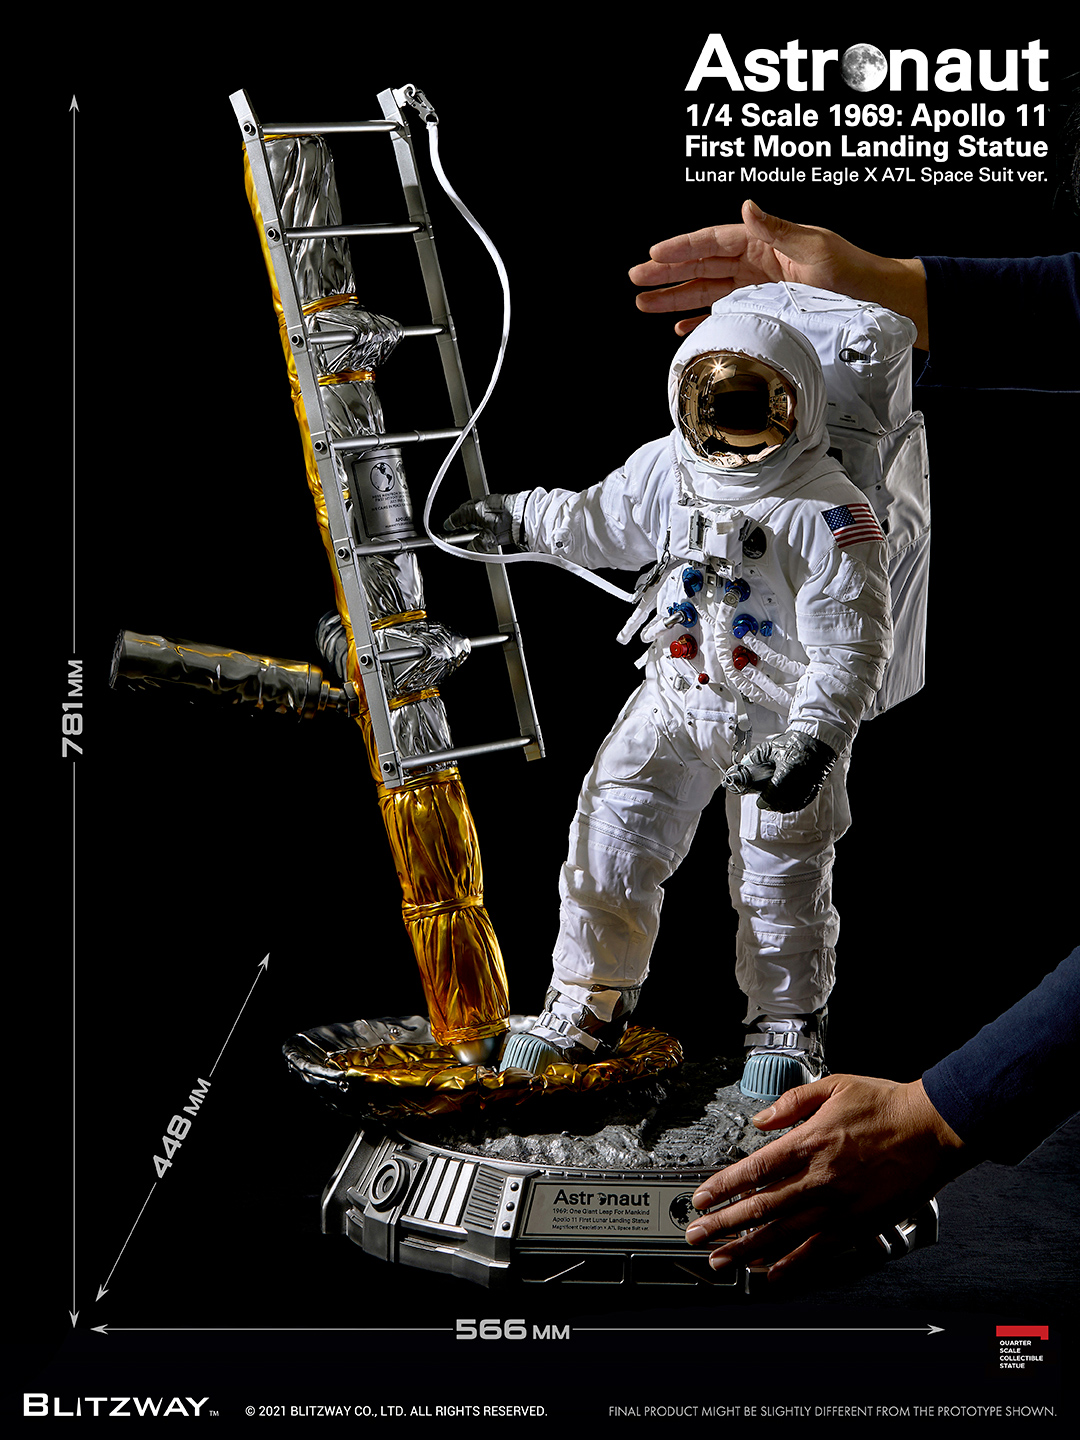 Apollo 11 Astronaut (LM-5 A7L Space Suit Ver.) First Moon Landing 1/4 Superb Scale Statue